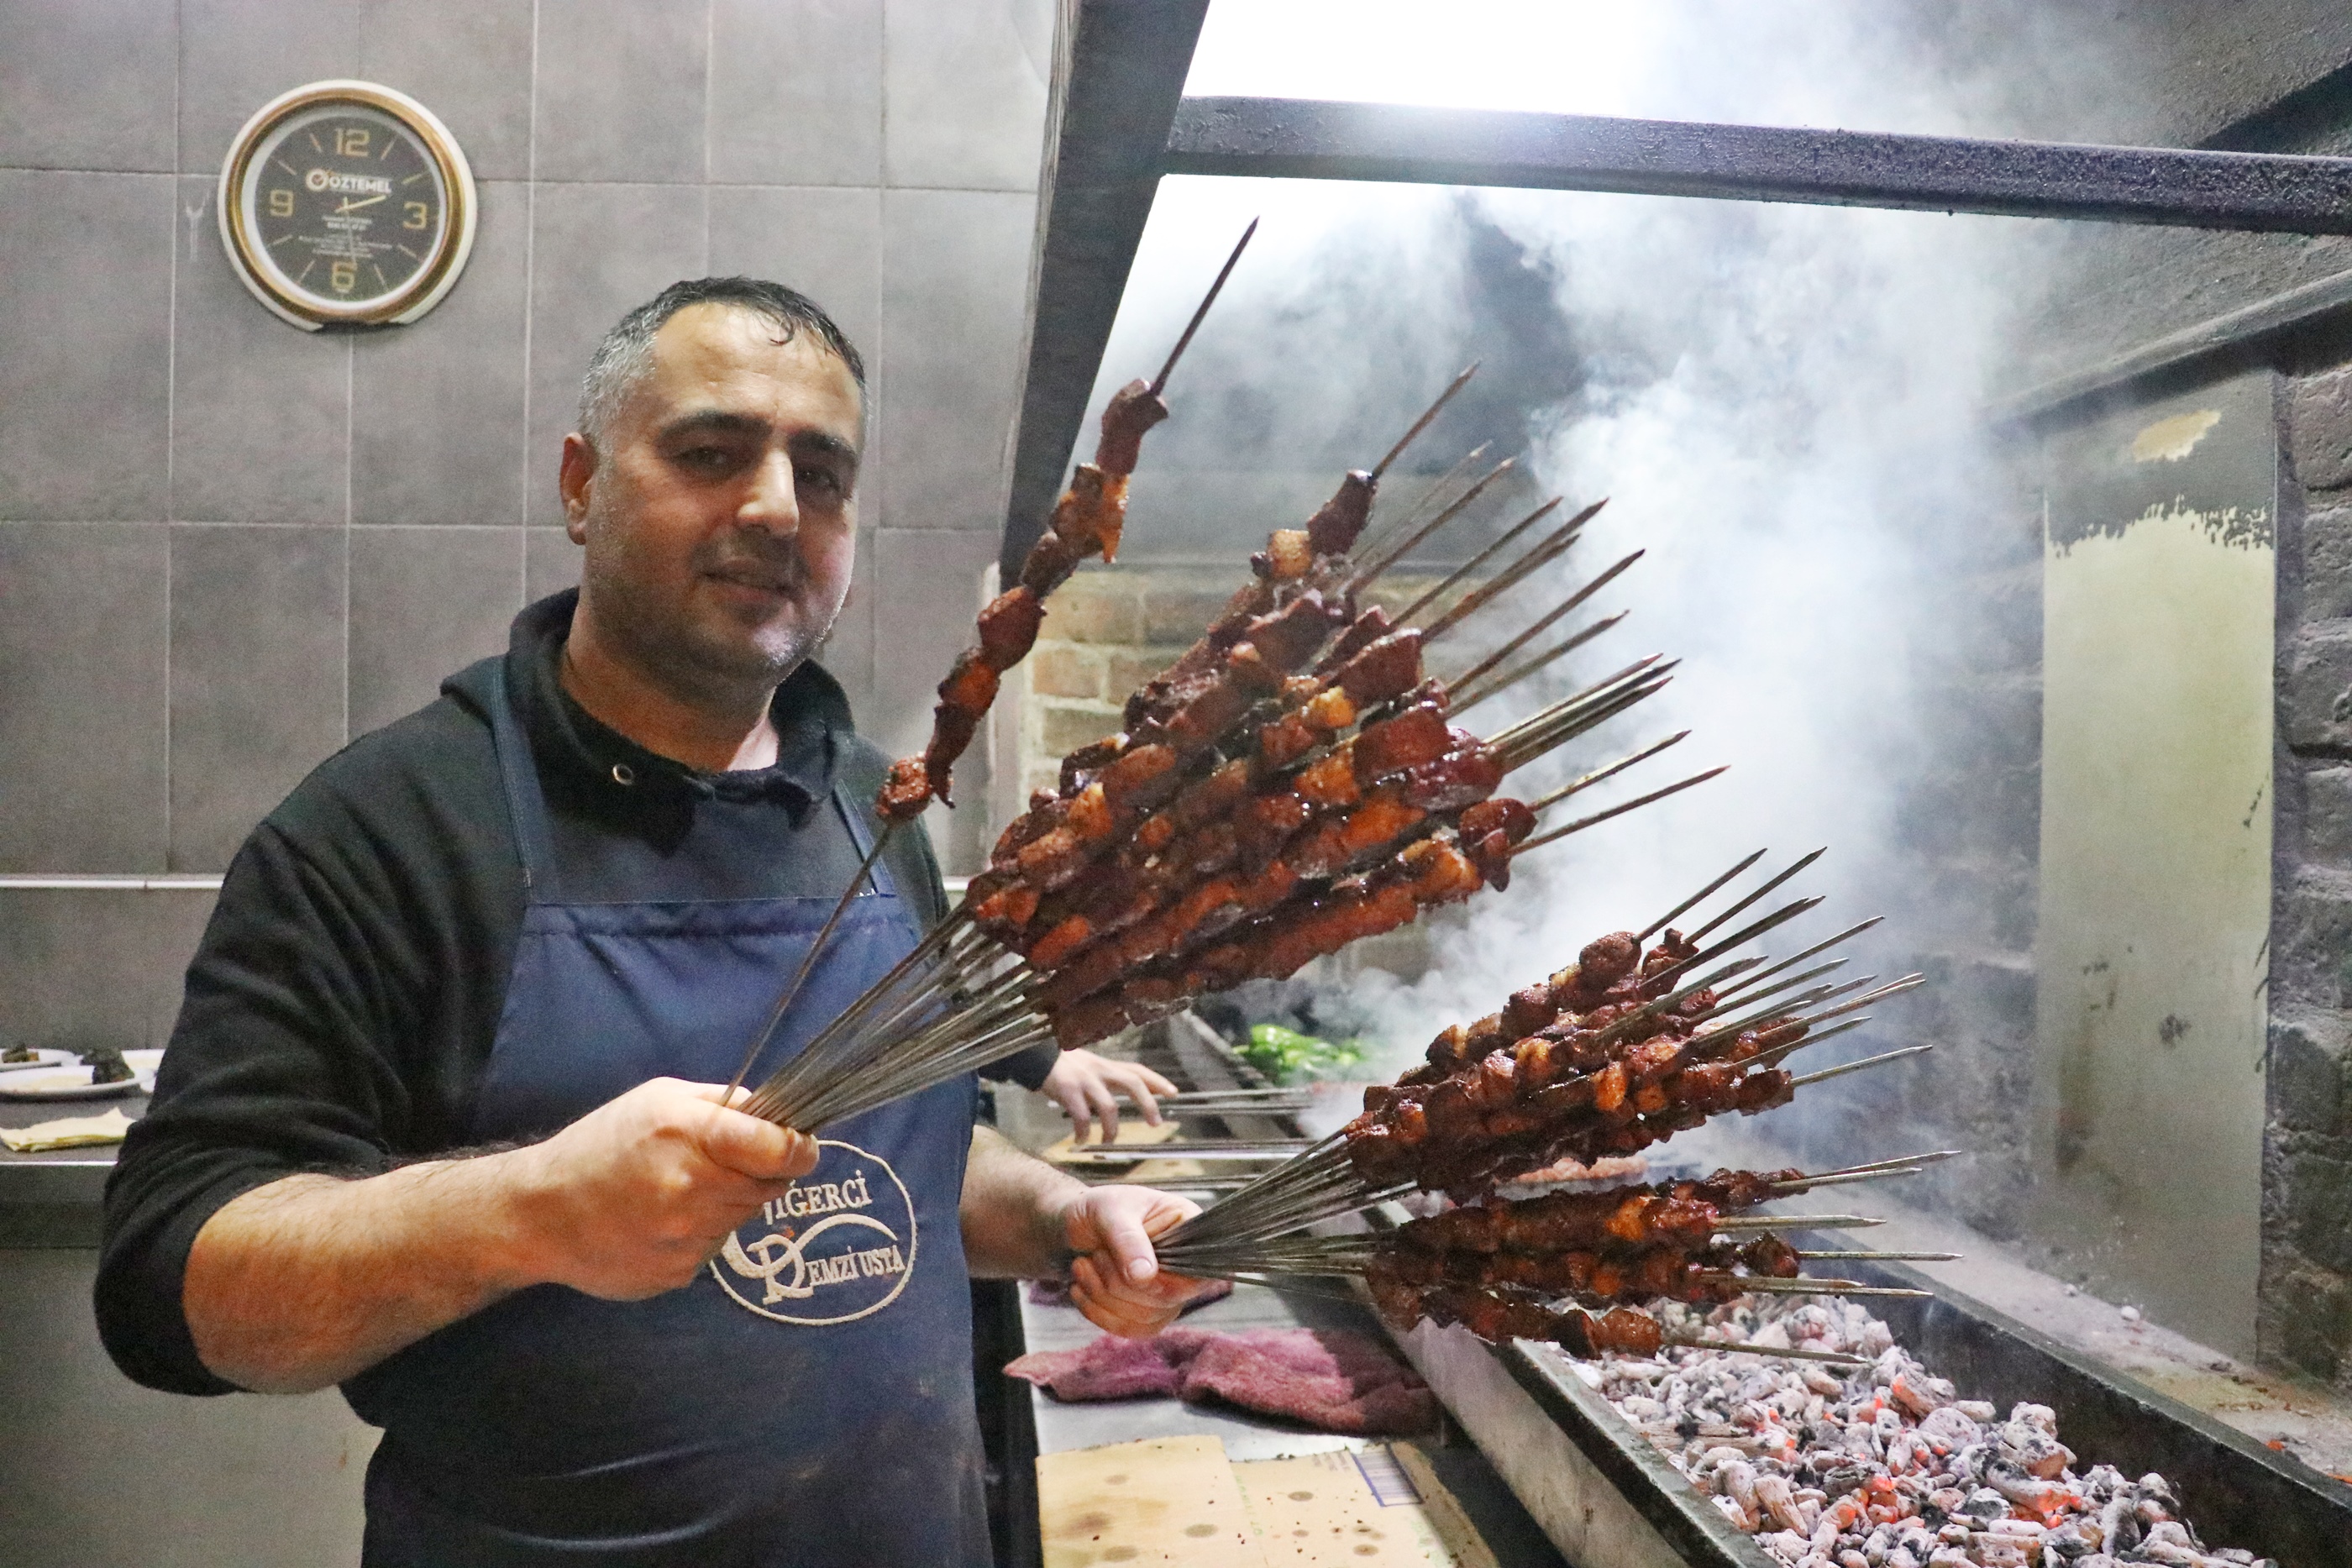 diyarbakirda-kuzu-cigerin-fiyati-eti-gecti-kasapta-kilosu-420-tl-1151-dhaphoto2.jpg